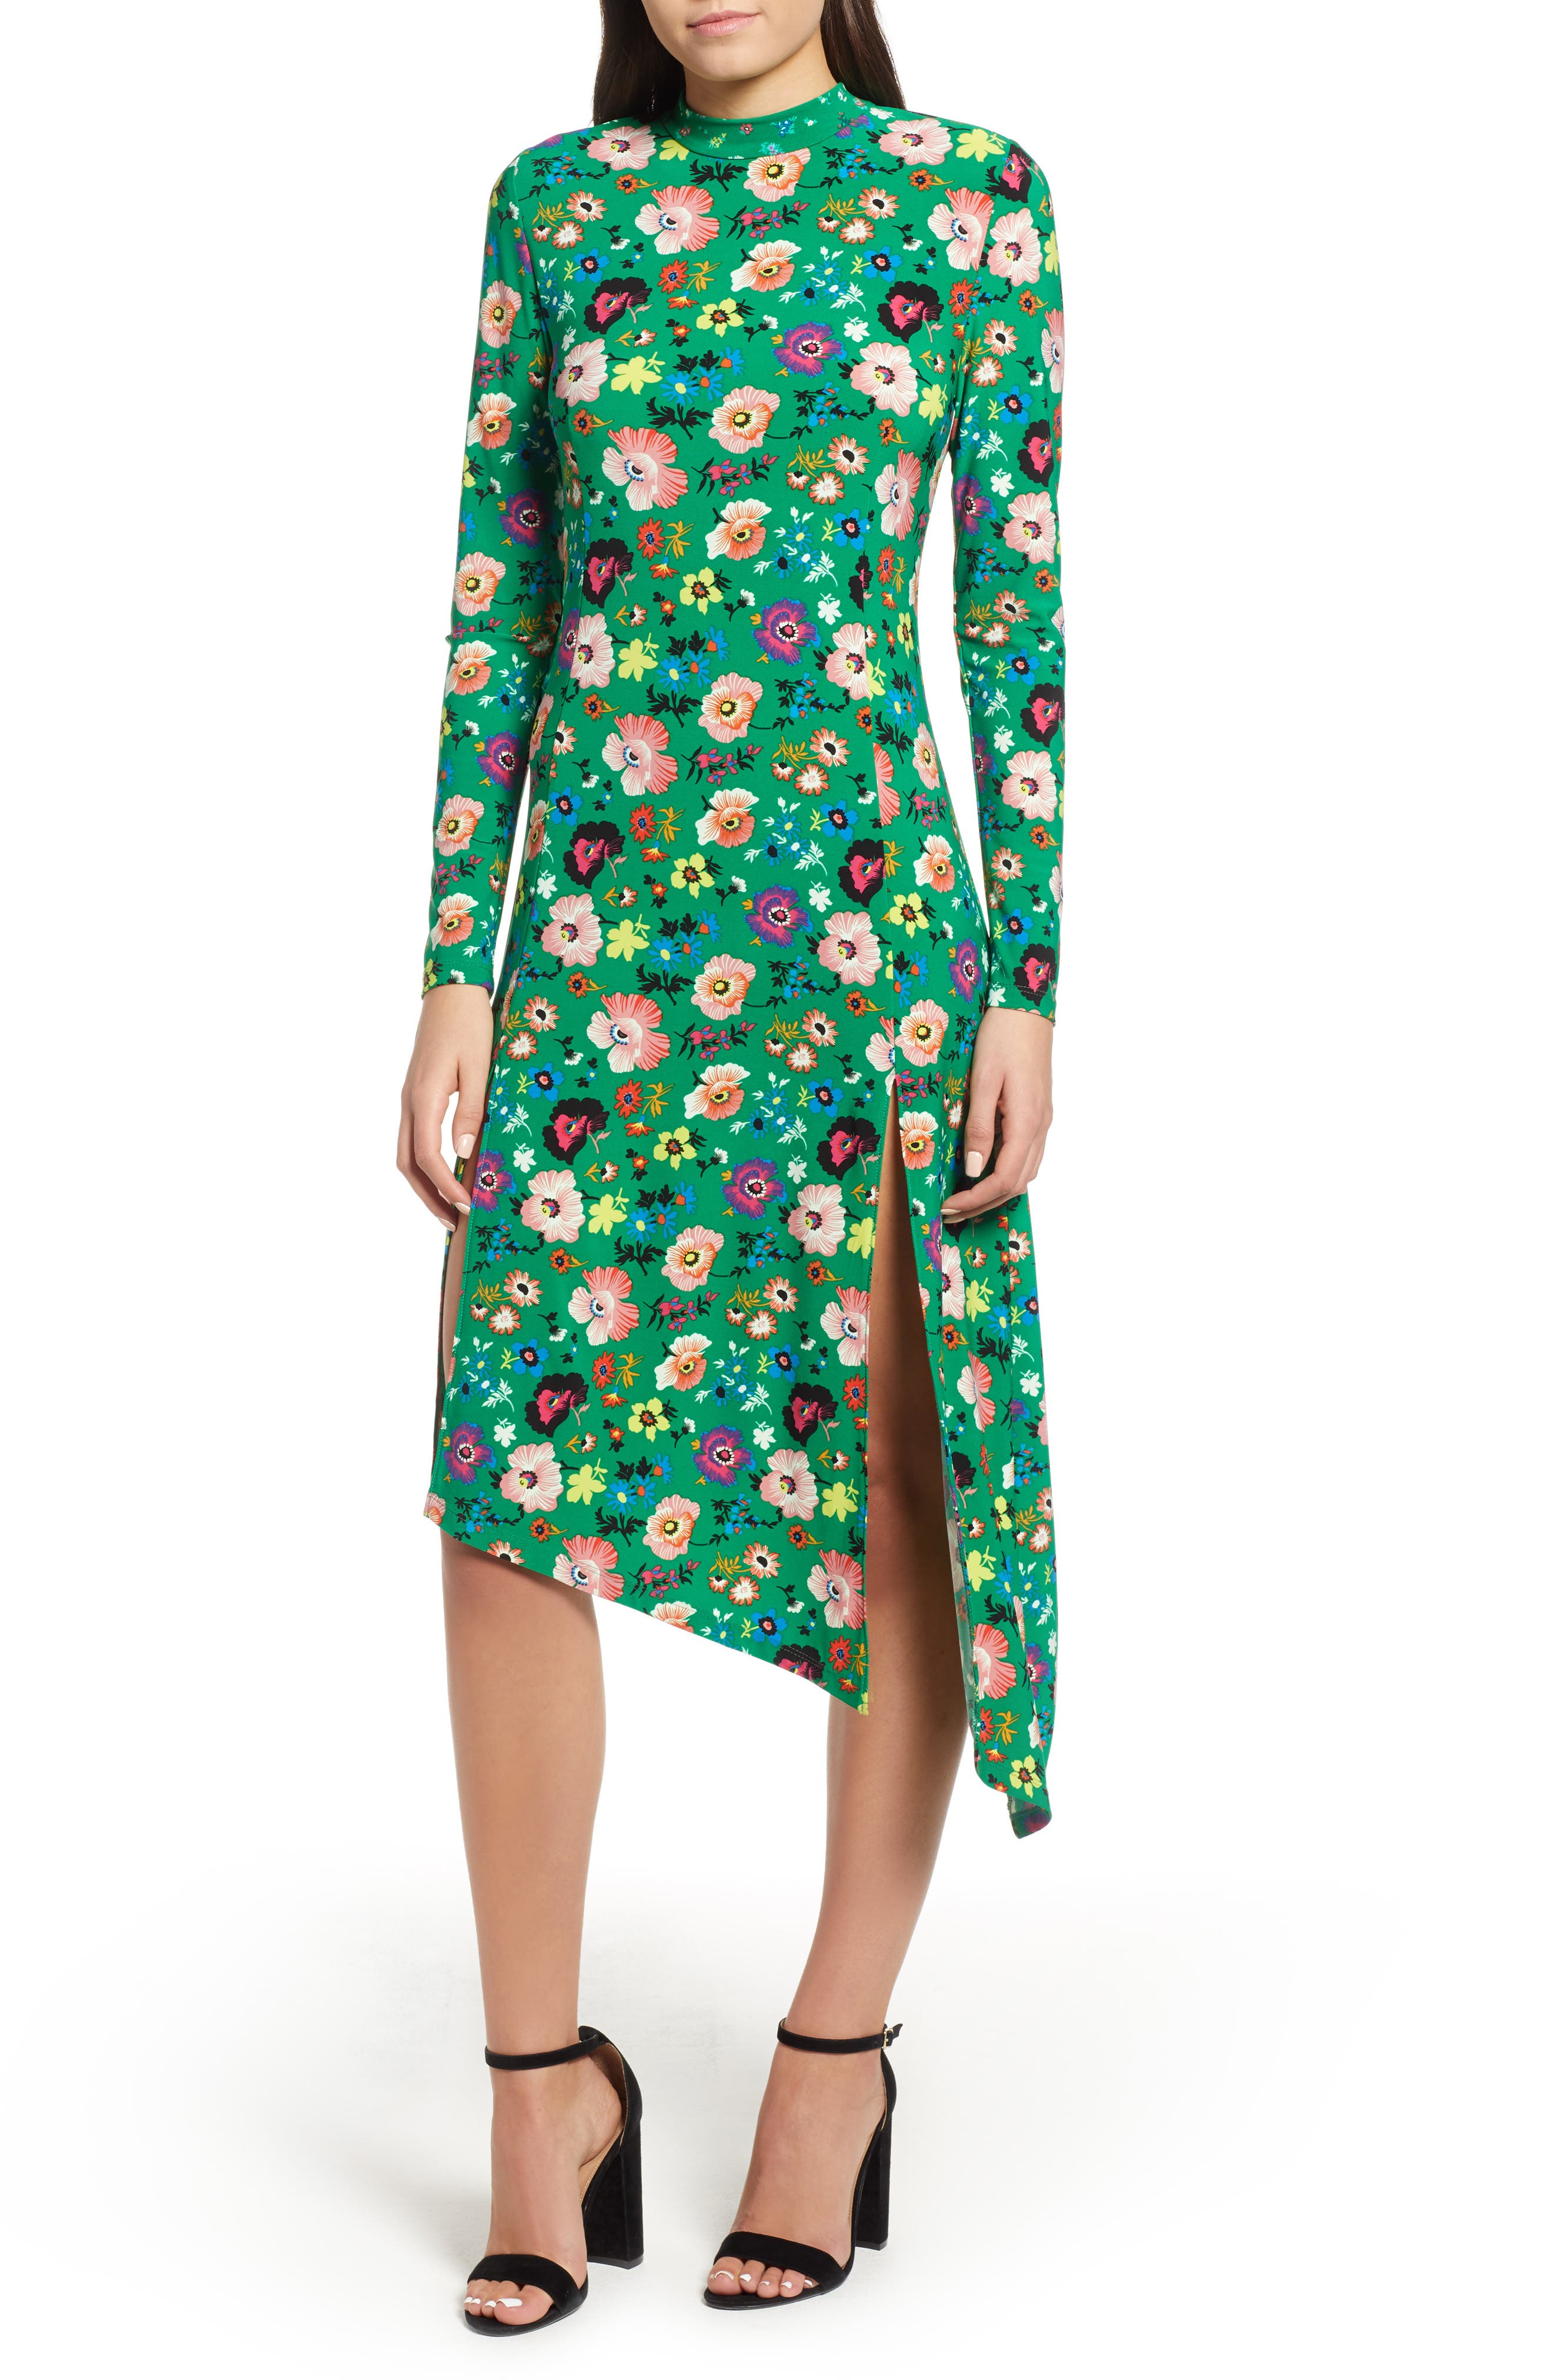 topshop green floral dress